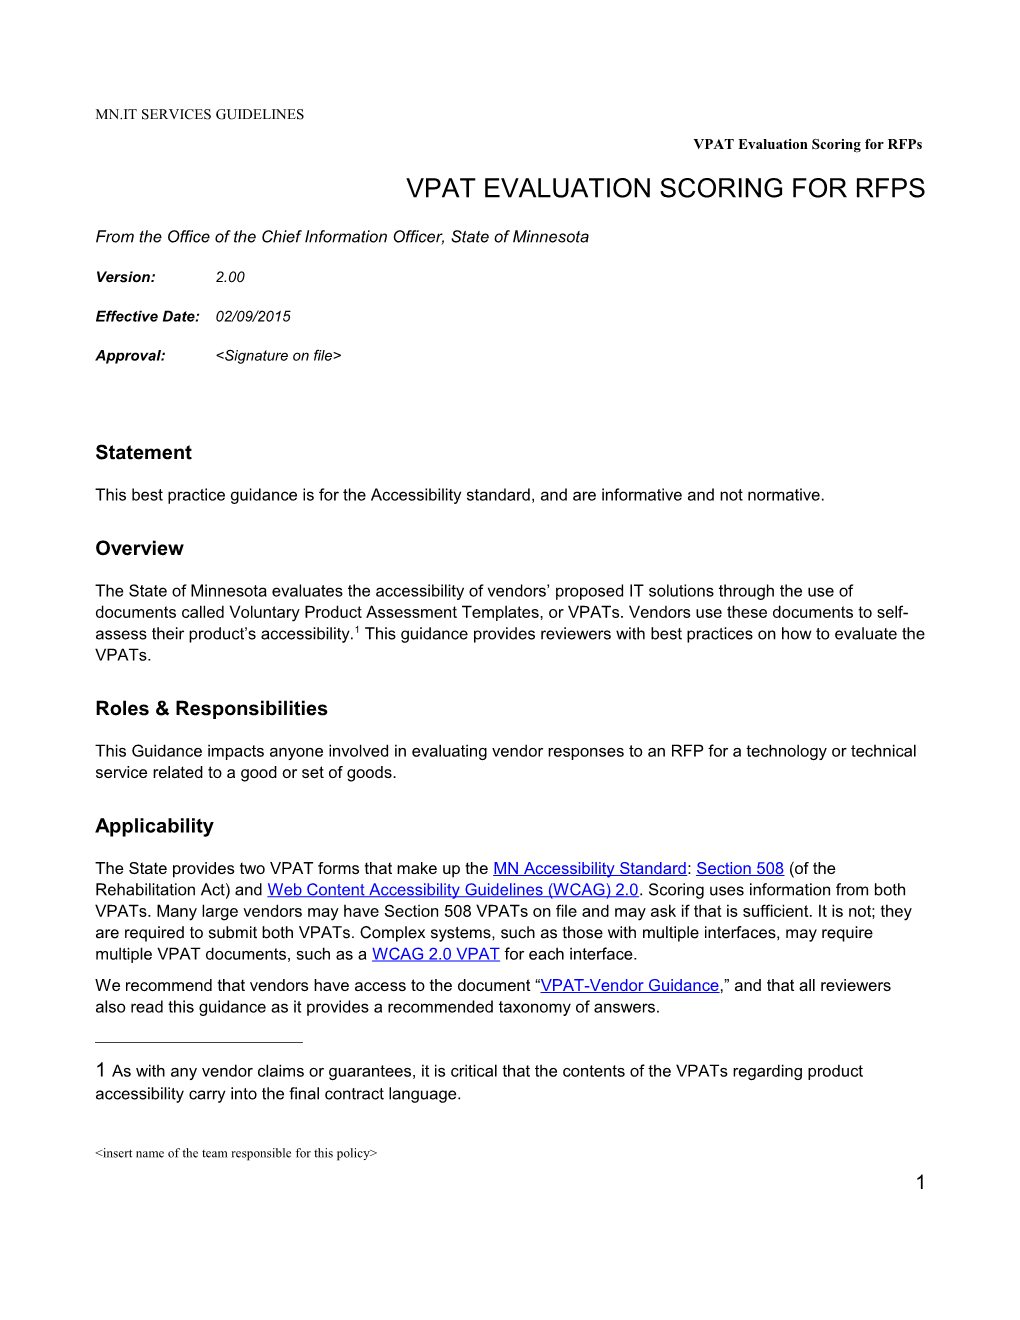 VPAT Evaluation Scoring for Rfps